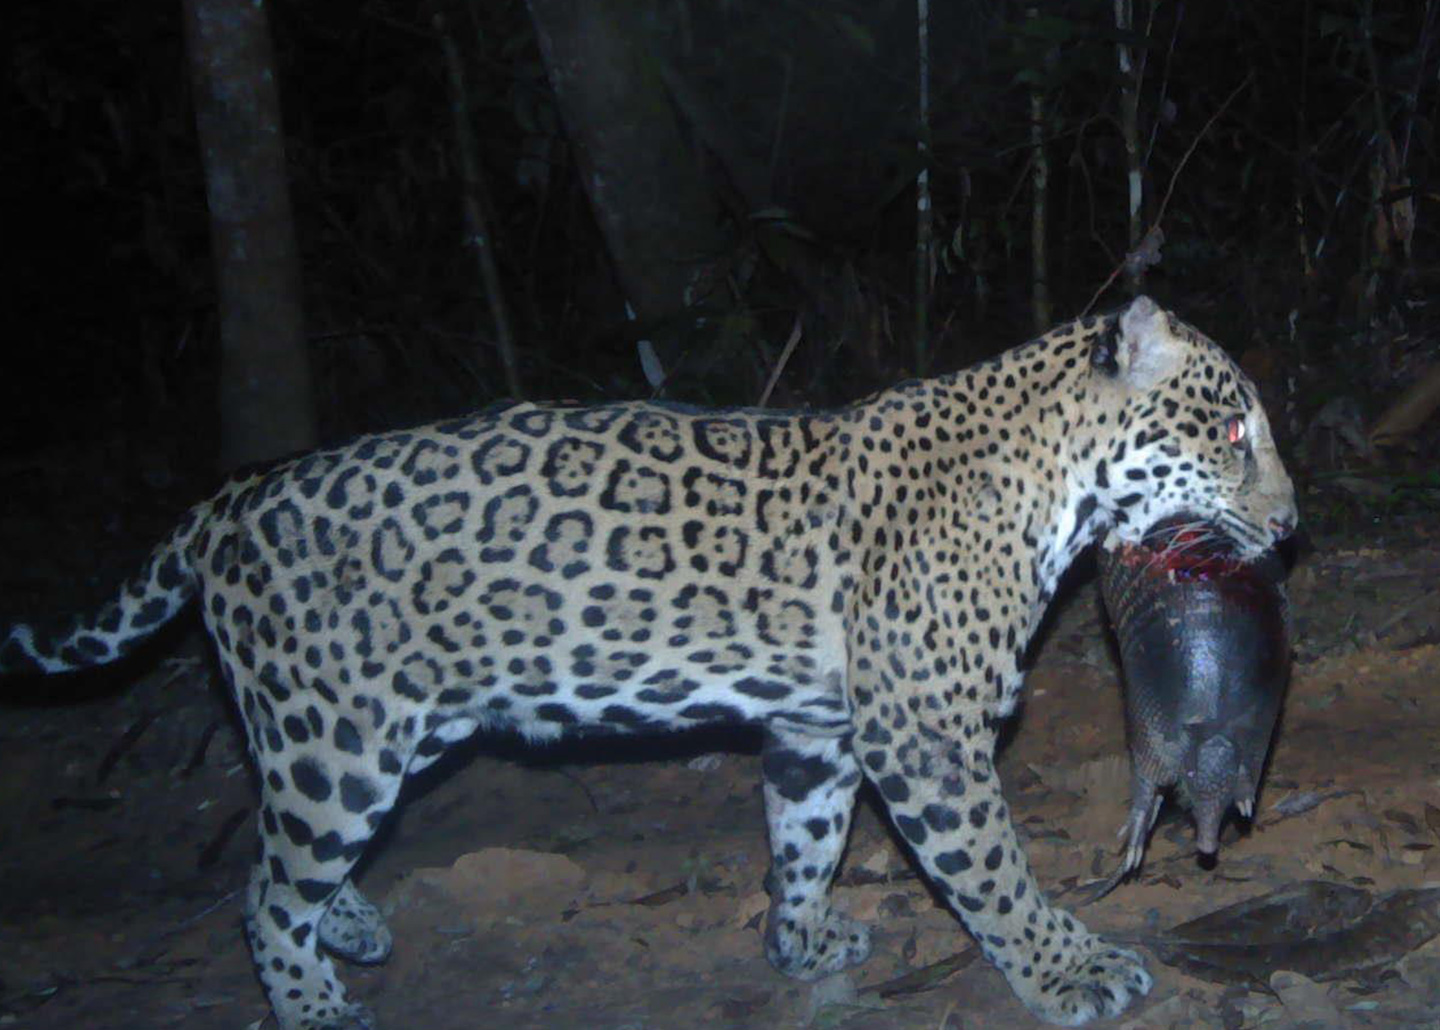 Jaguar biting into armadillo